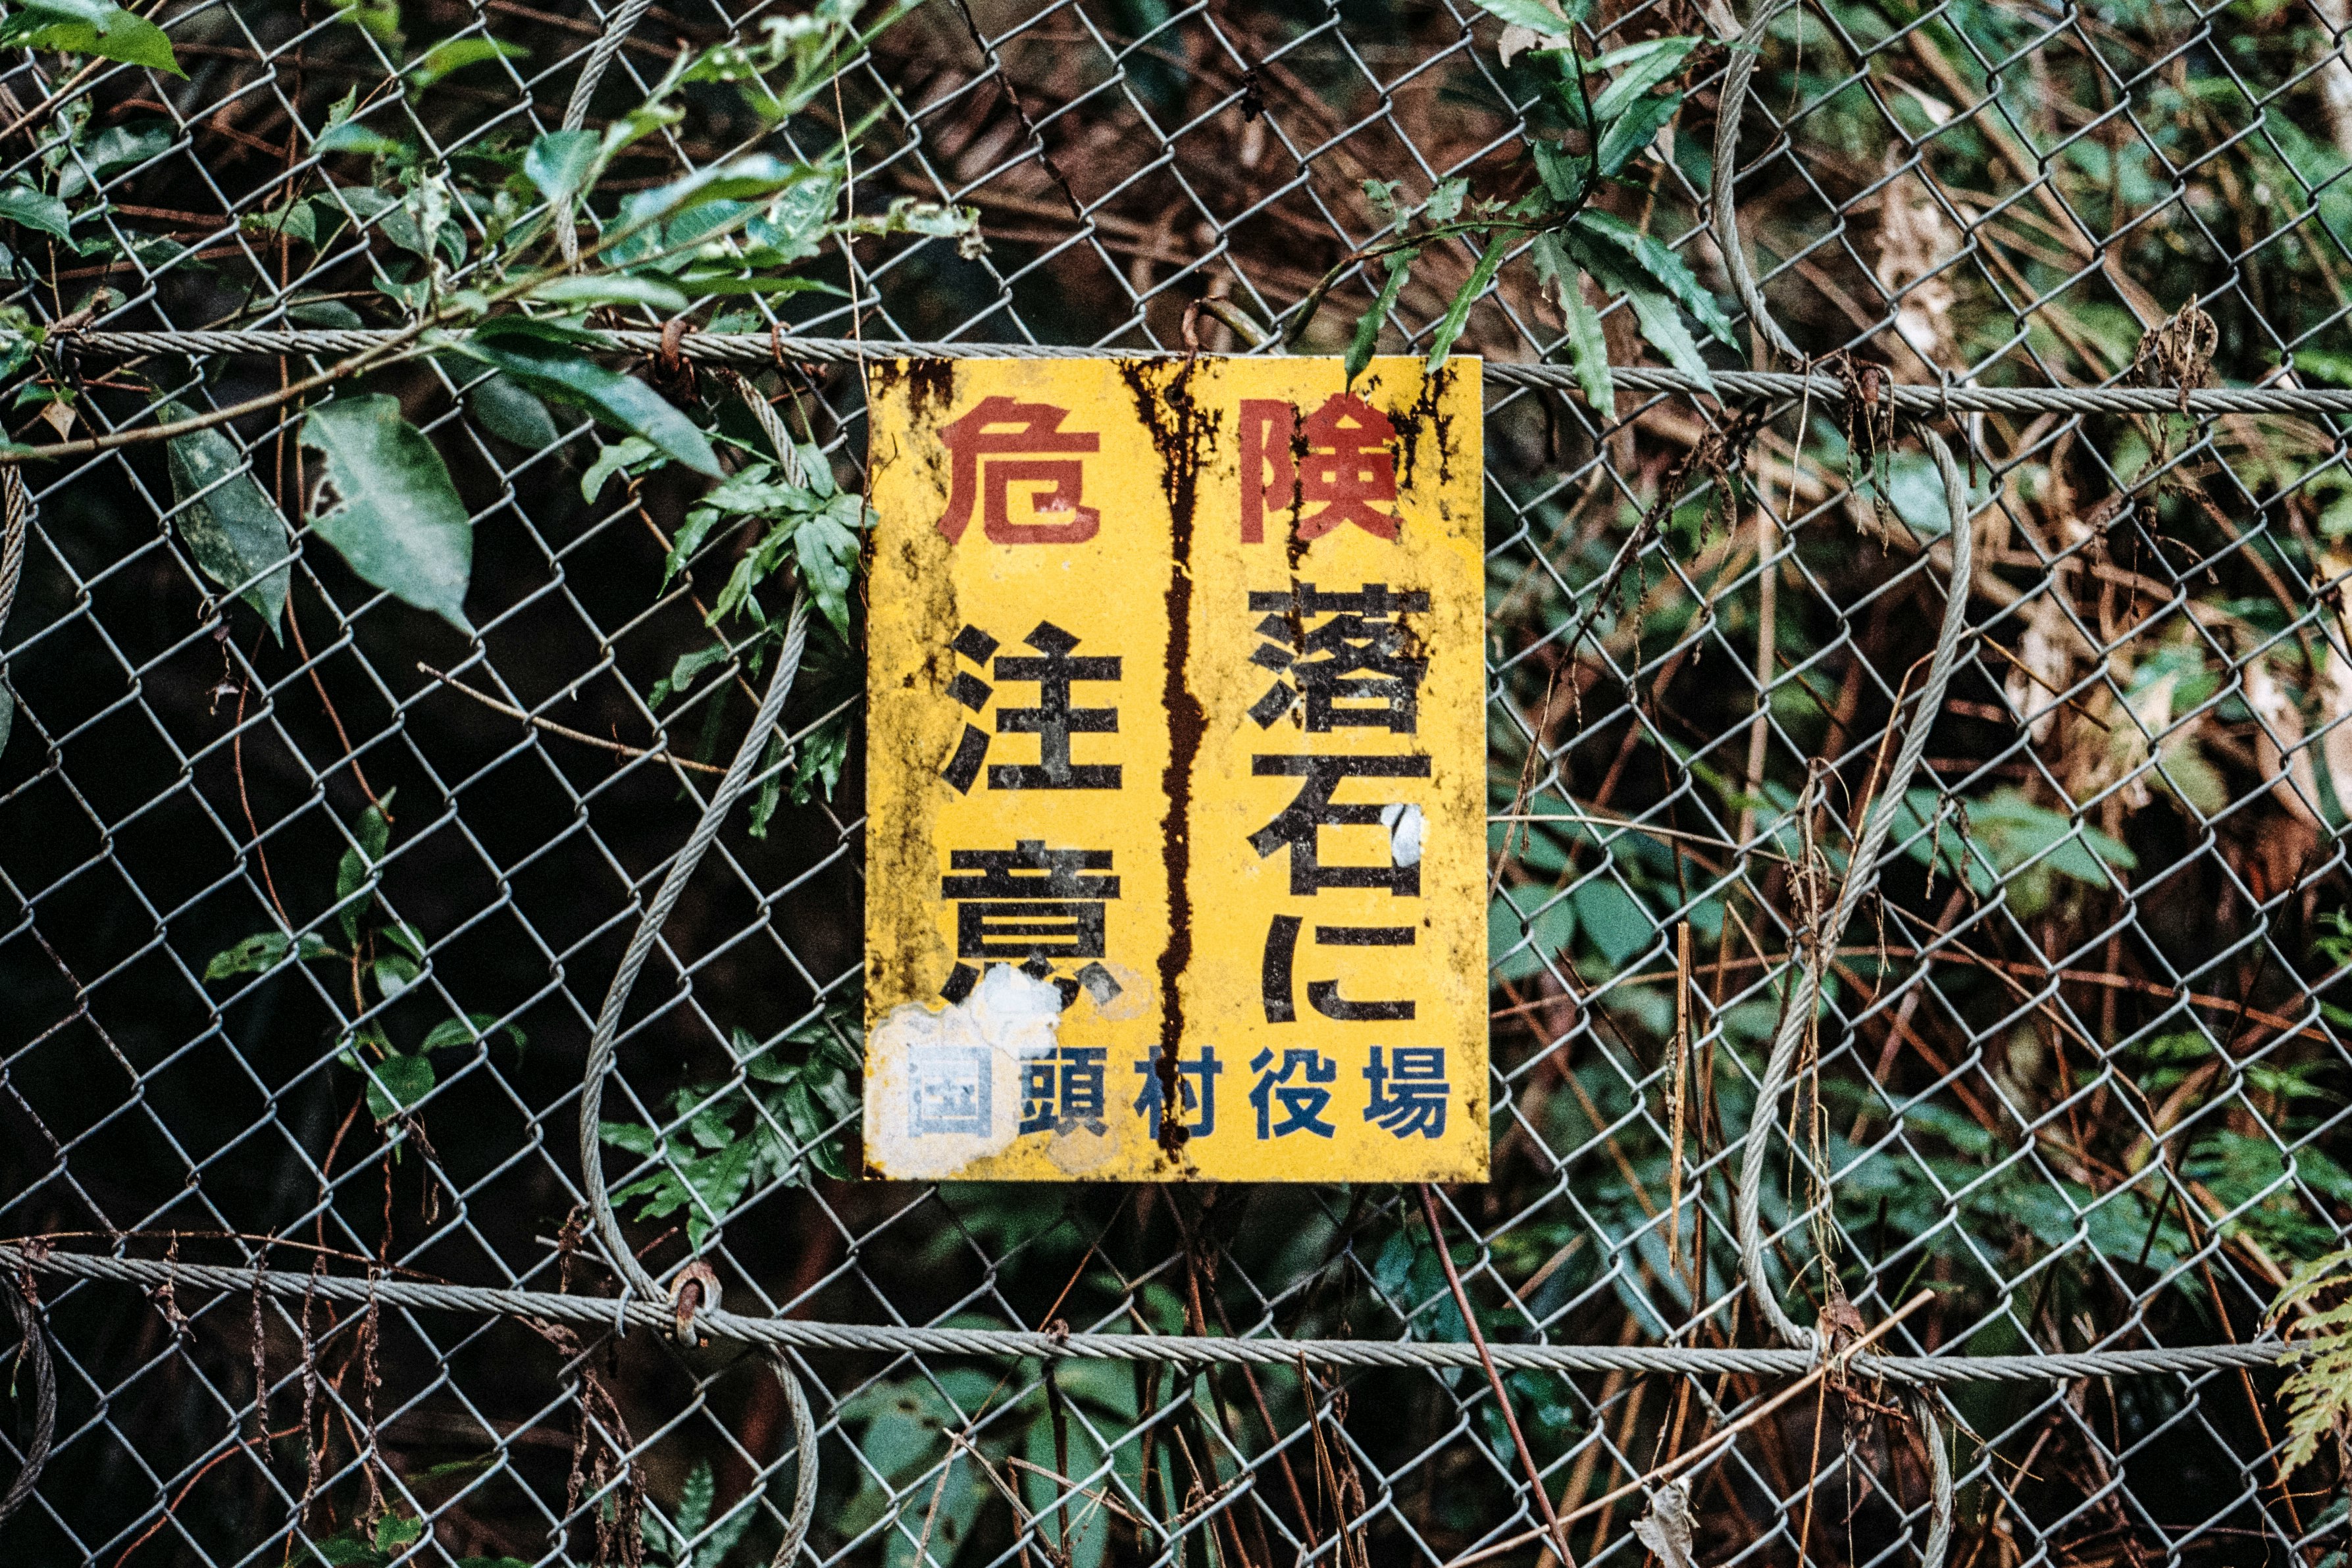 kanji labeled signage hanged on wire fence